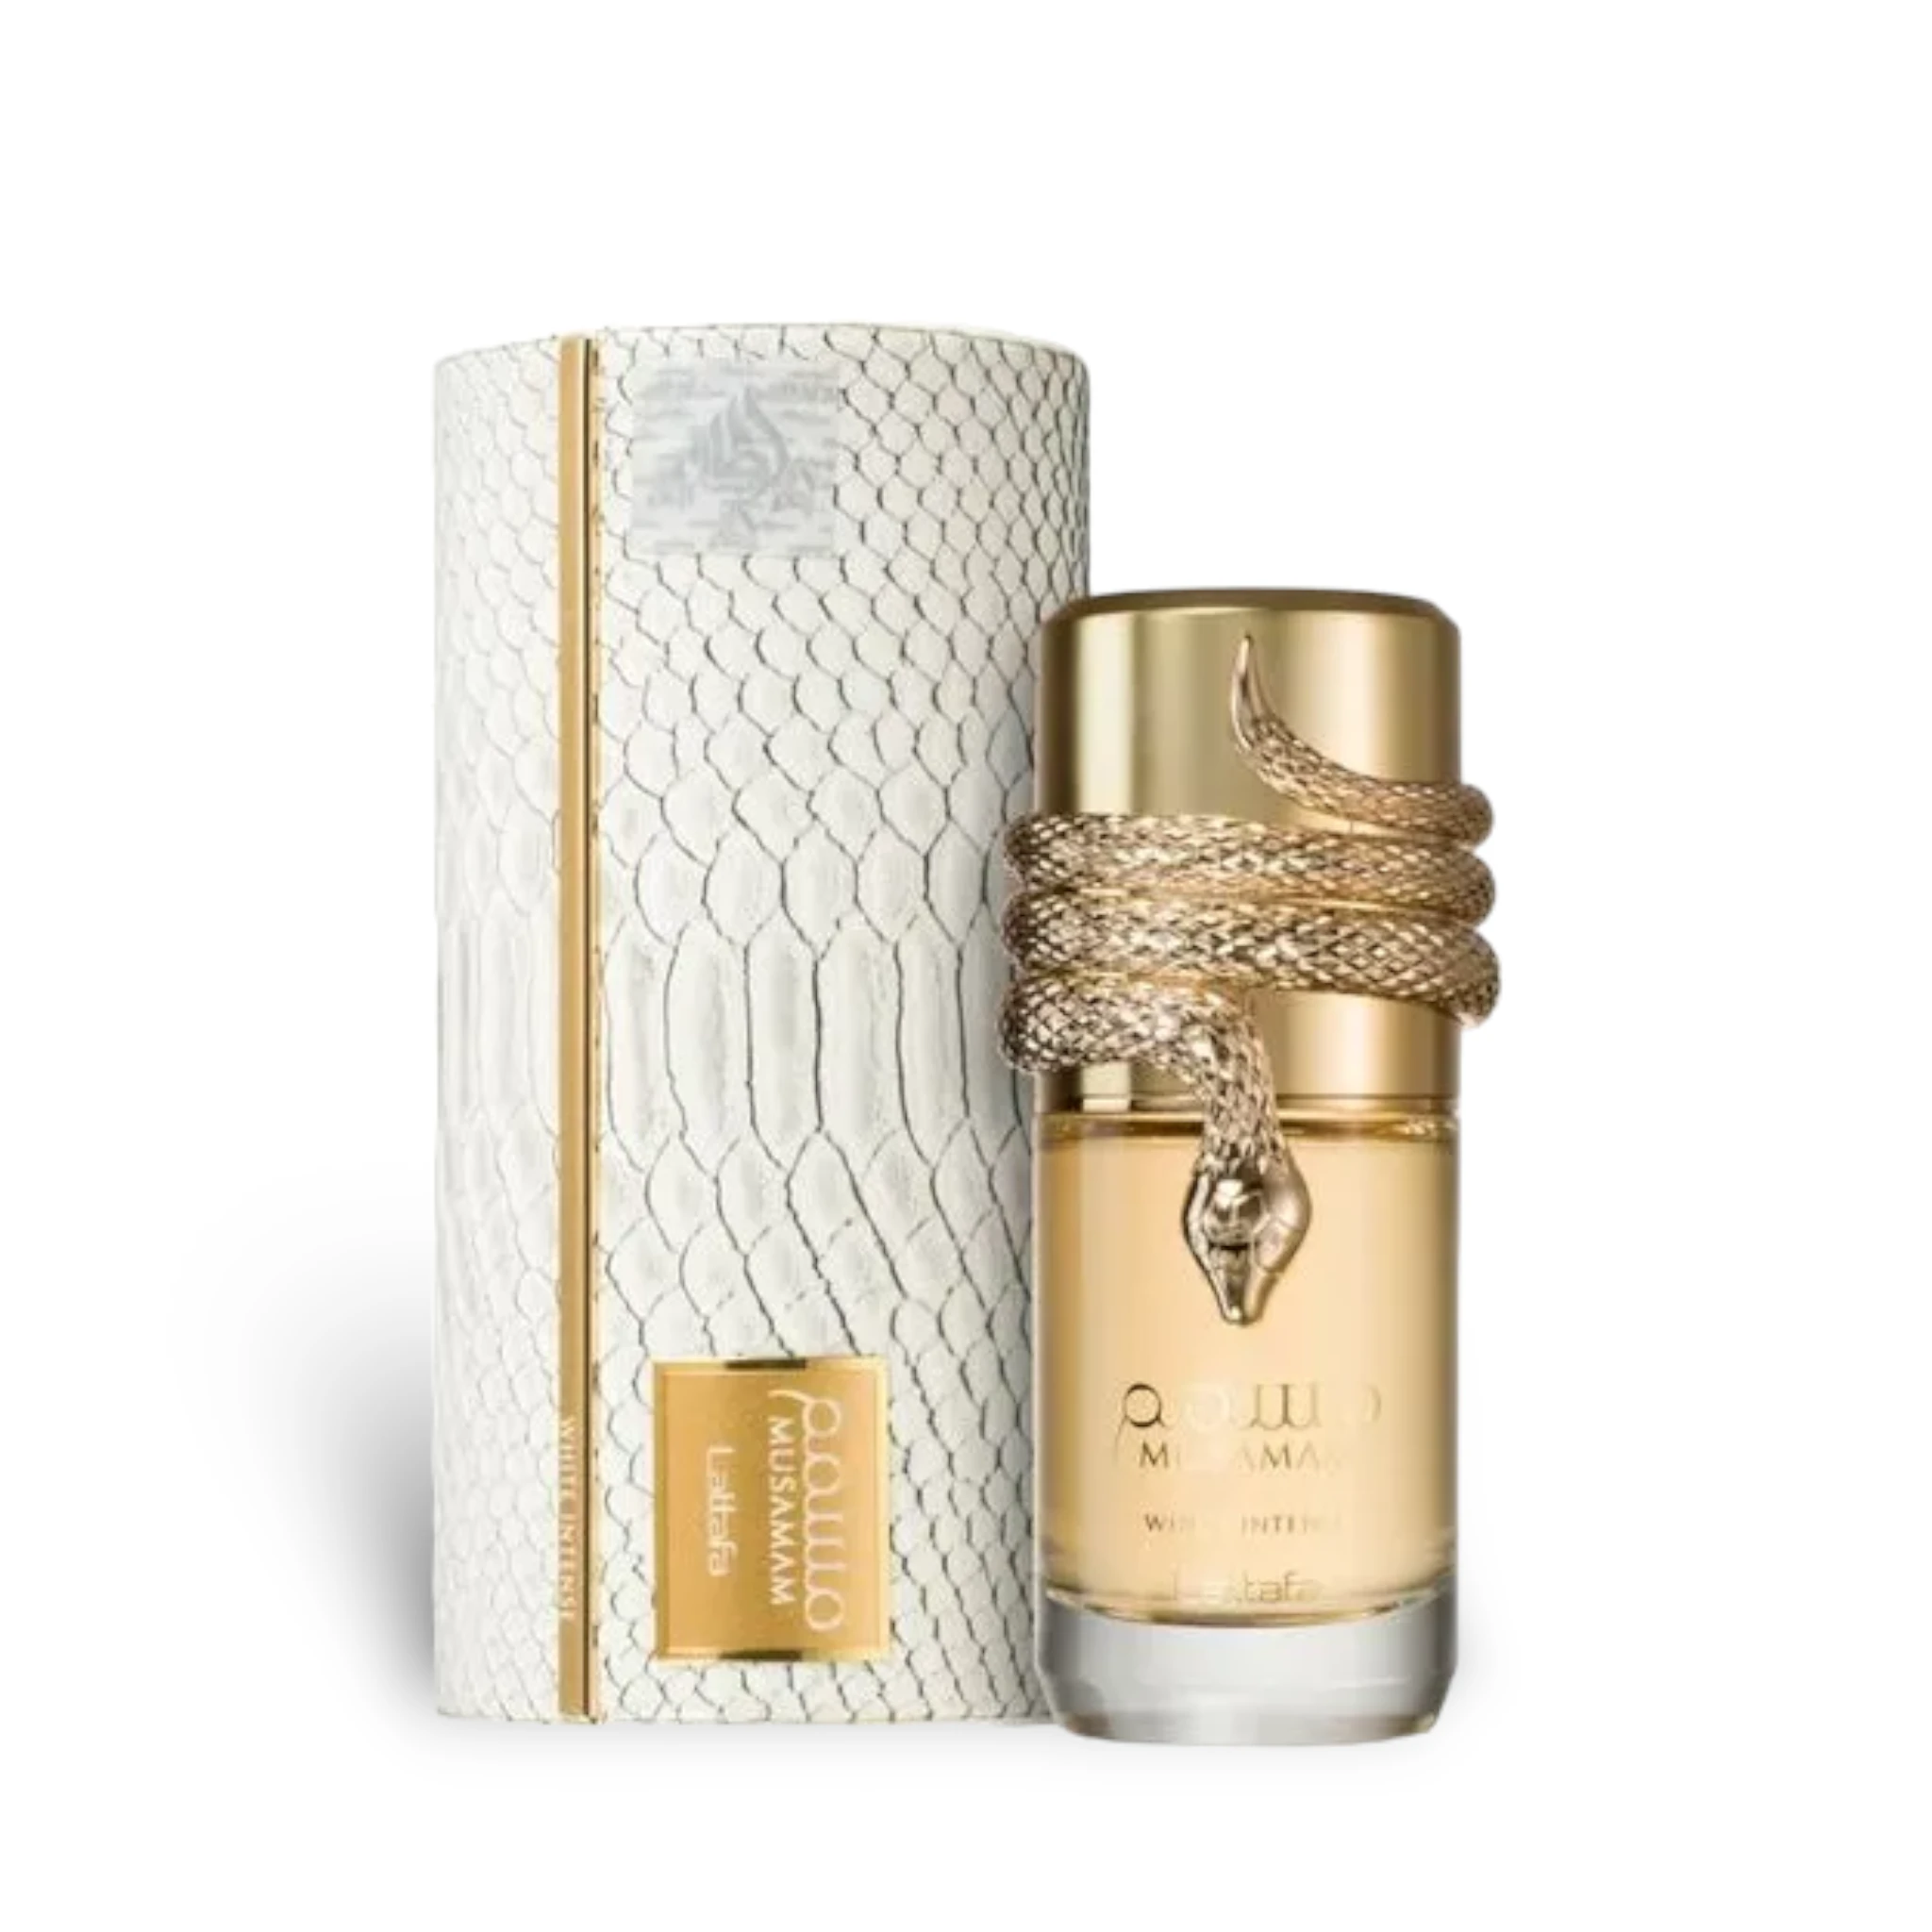 Musamam White Intense Perfume Eau De Parfum 100Ml By Lattafa